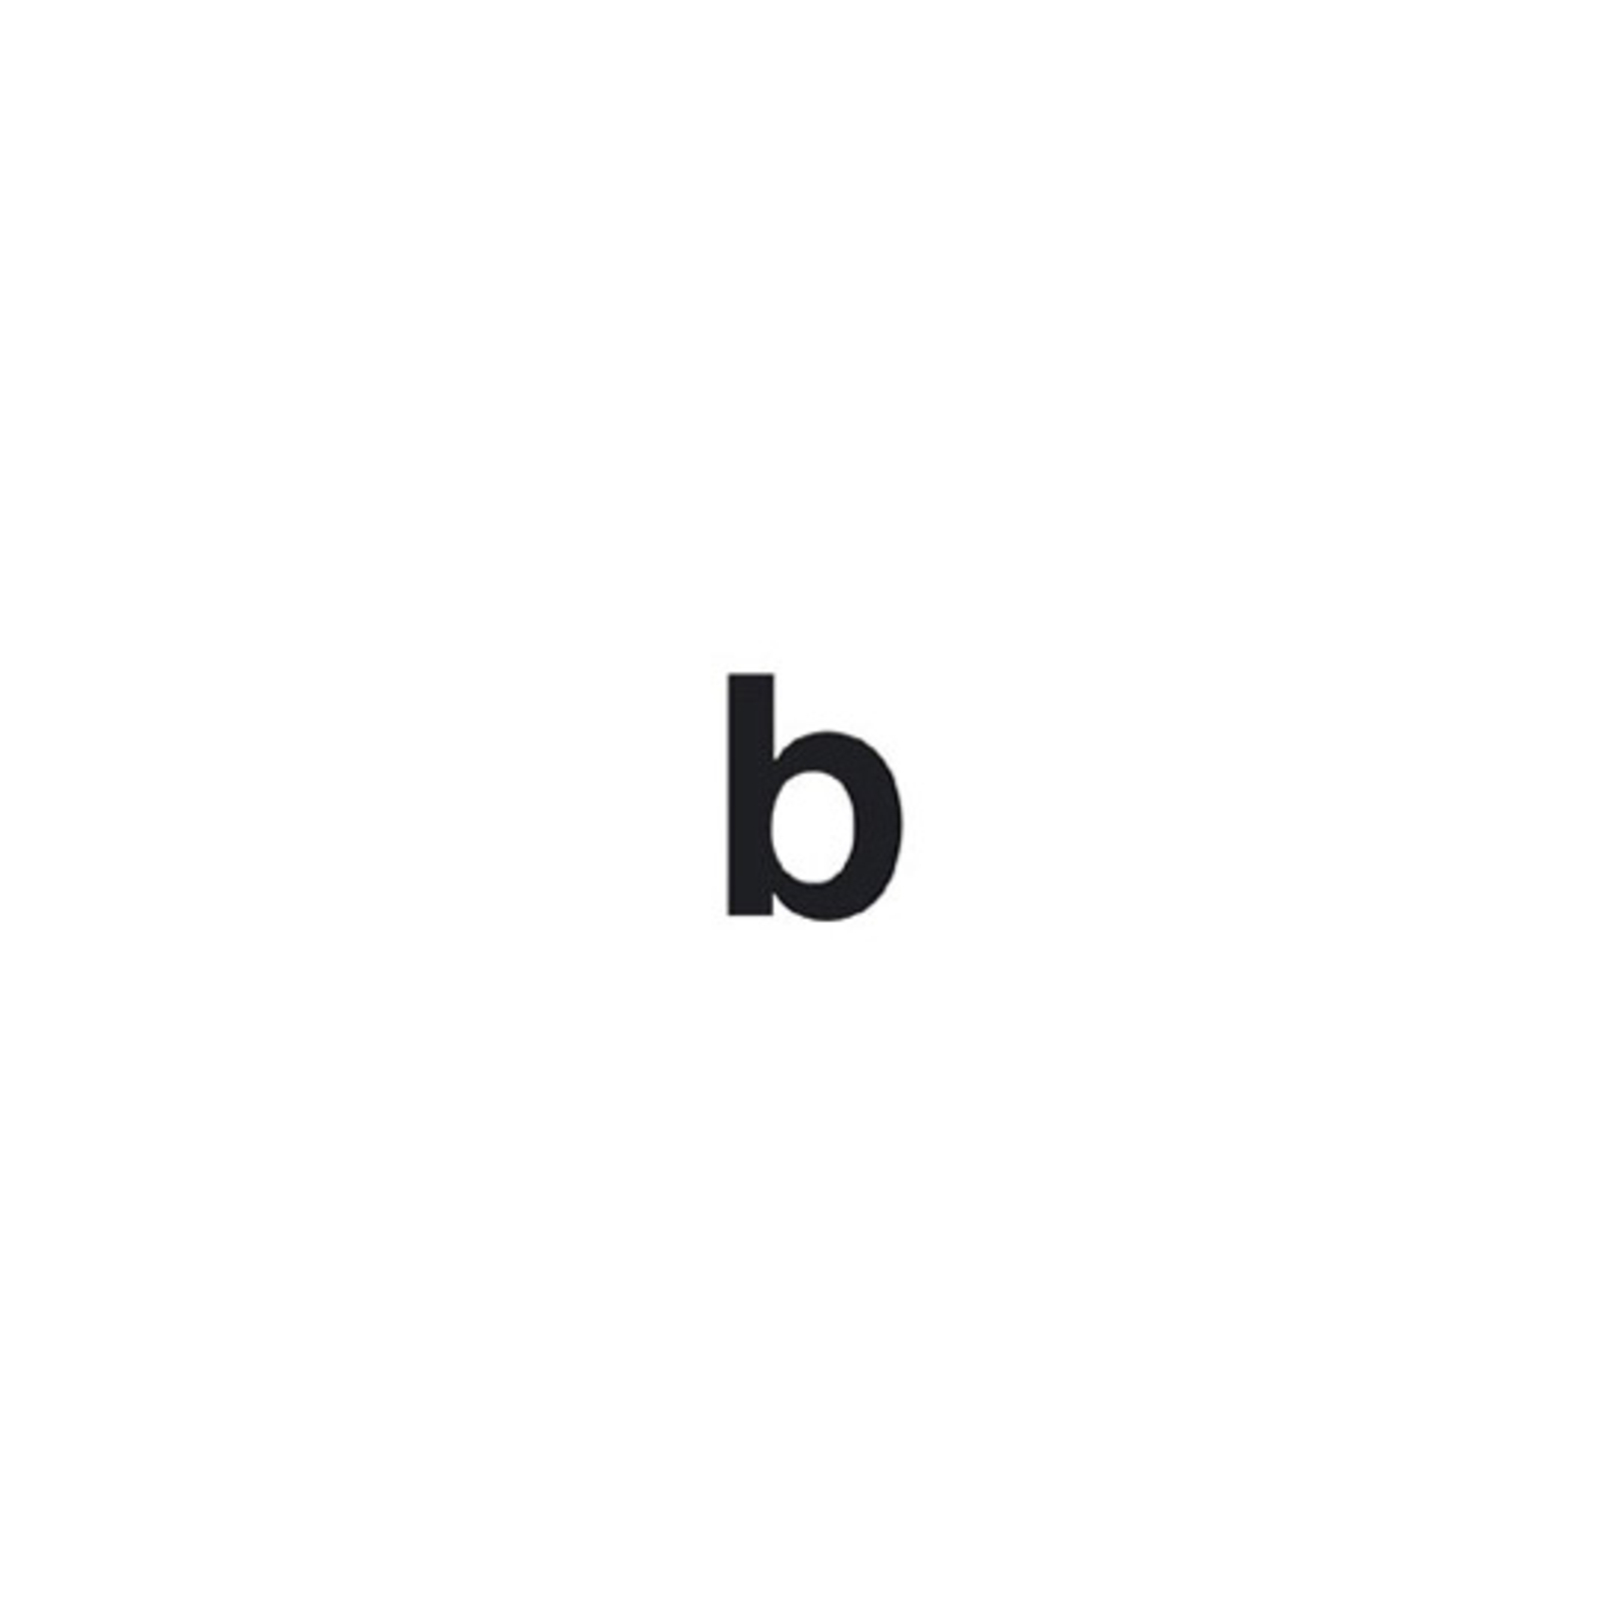 Self-adhesive letter b